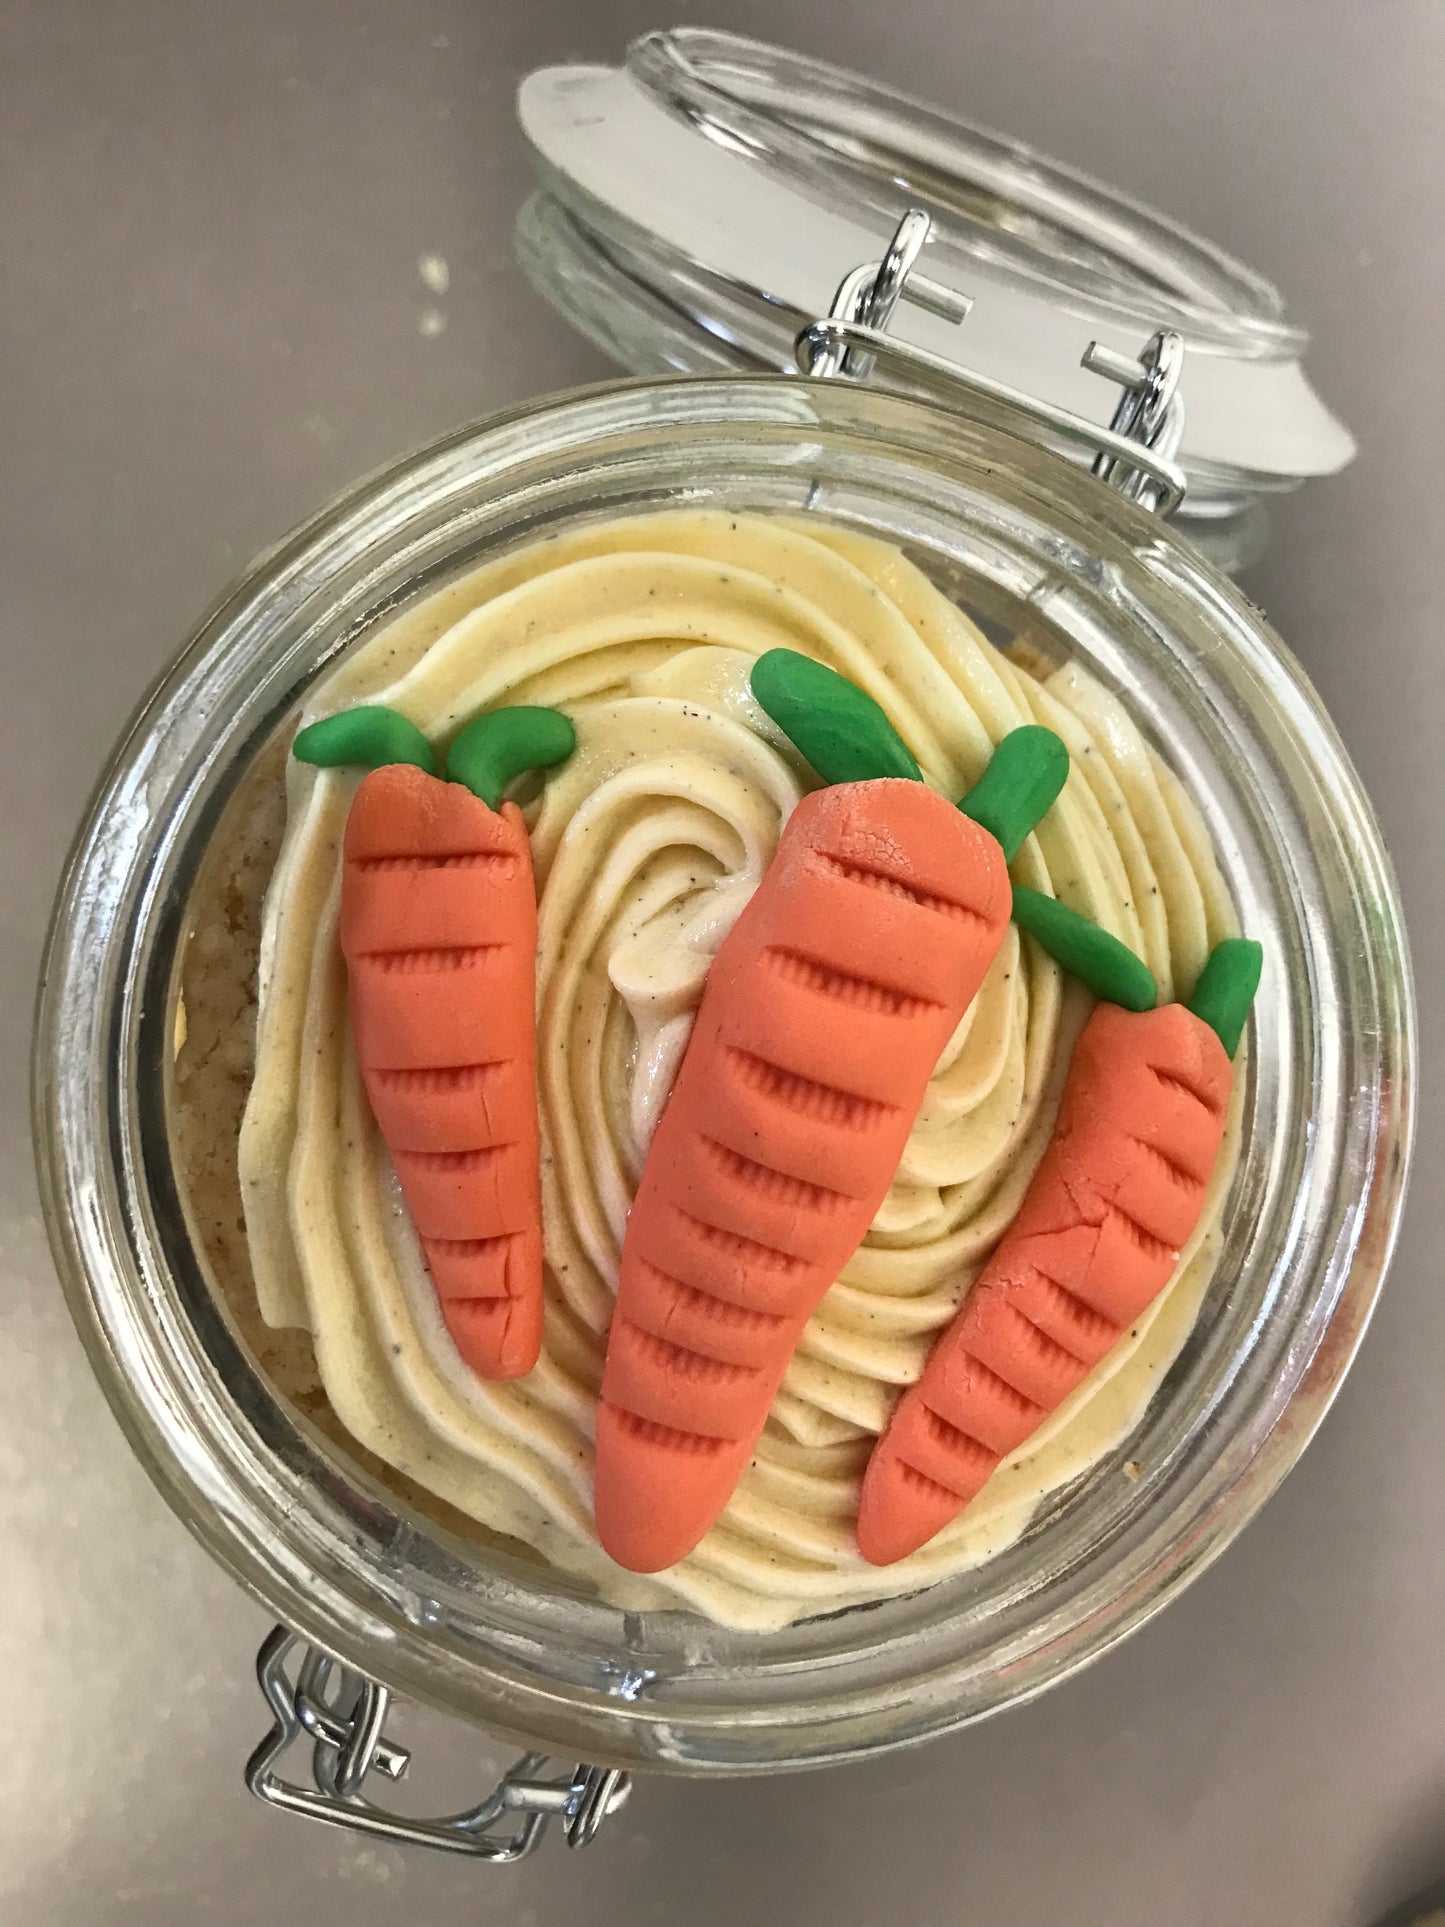 XL Carrot Cake in a Jar